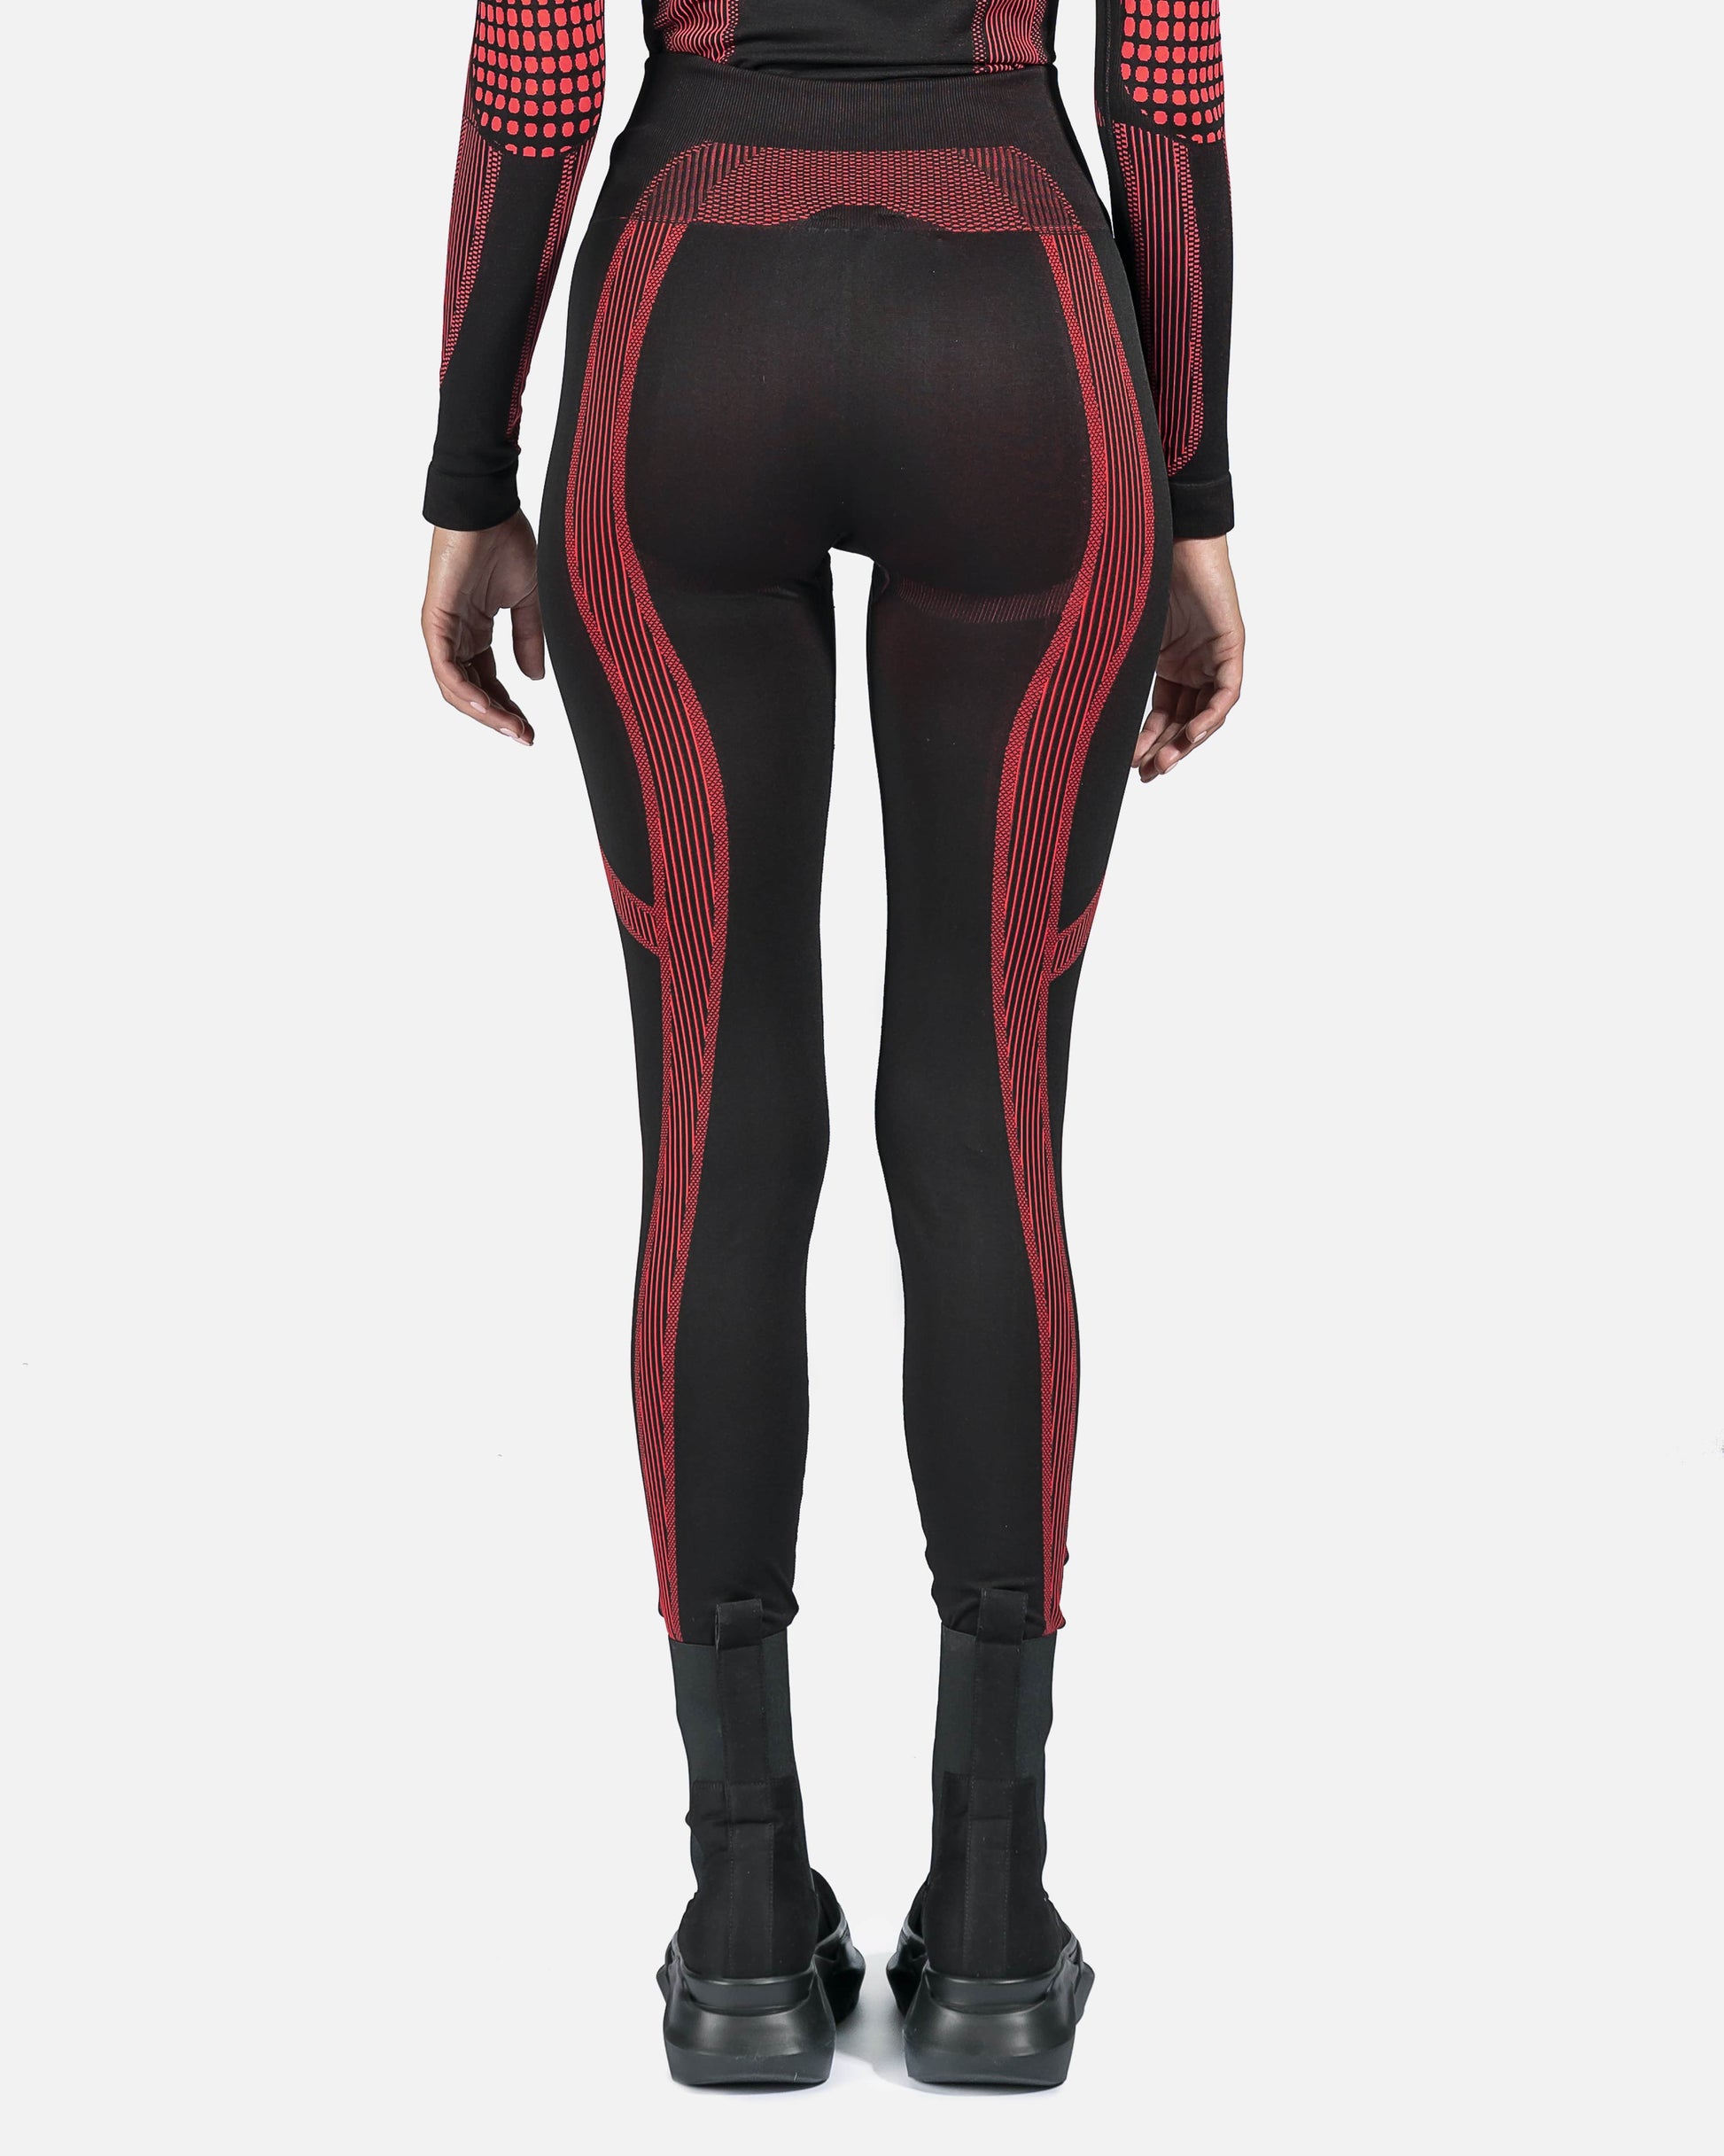 MISBHV Women Pants Sport Active Leggings in Black/Red